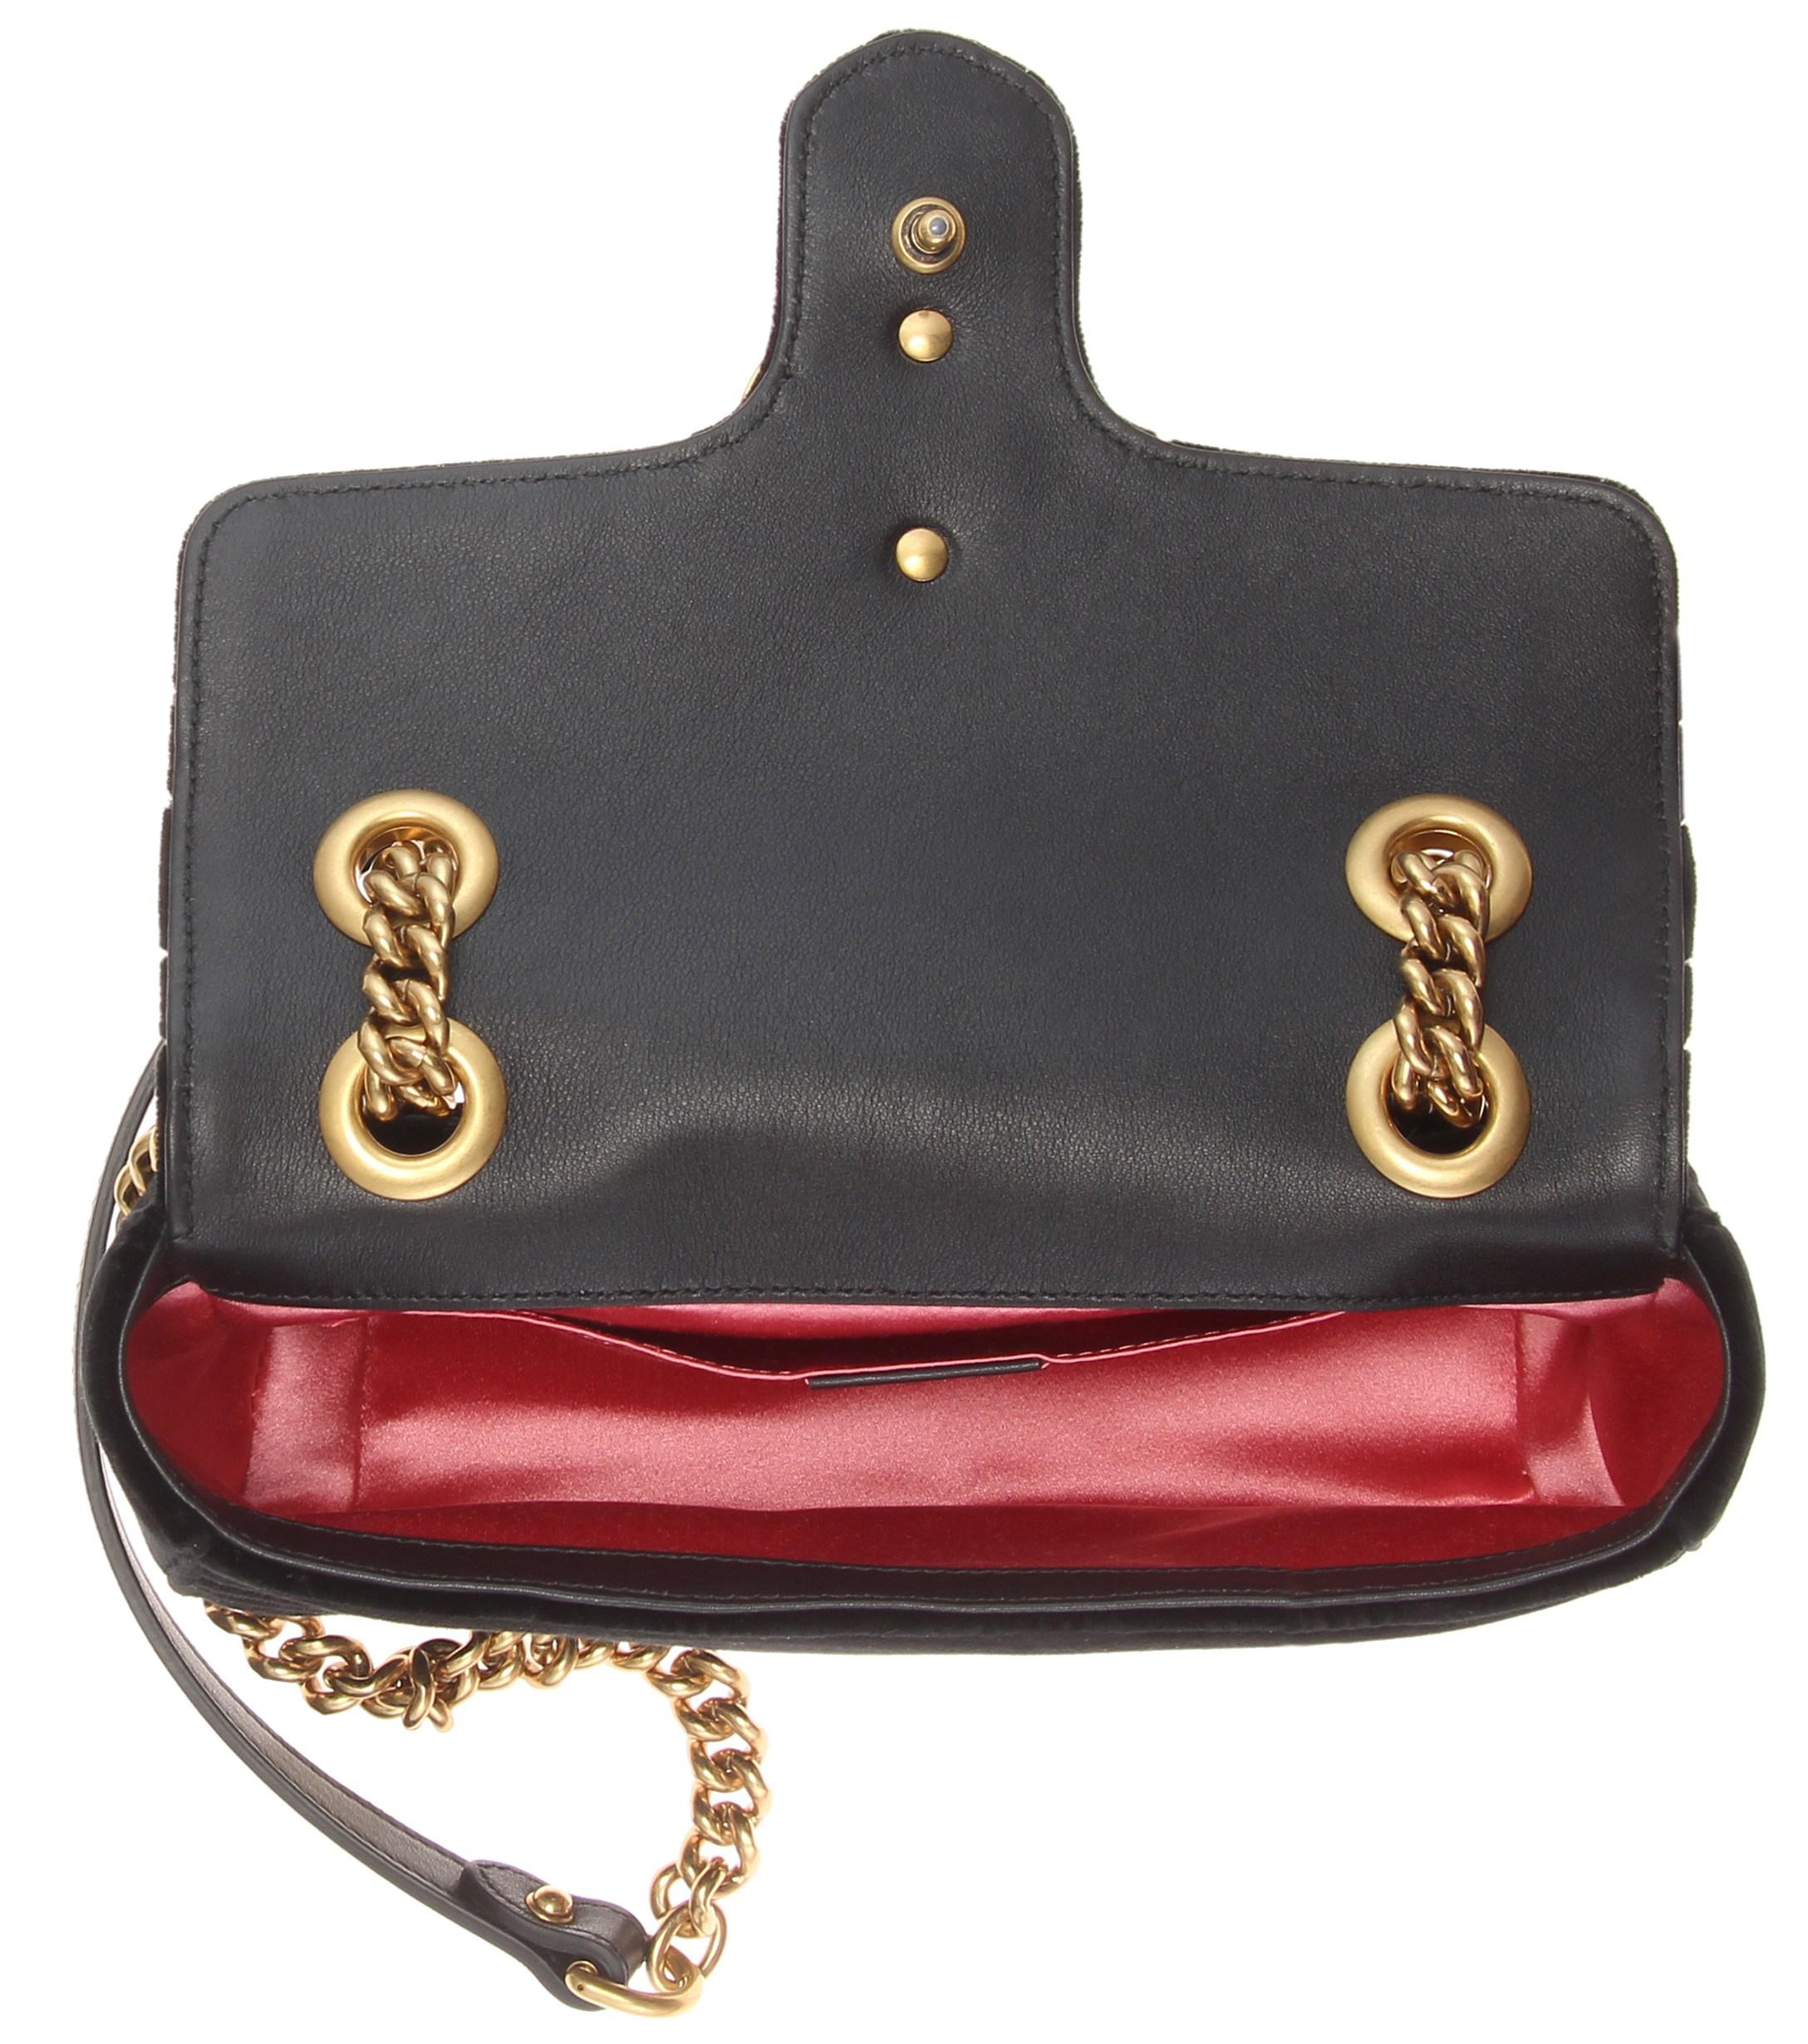 Gucci GG Marmont Mini Velvet Shoulder Bag in Black - Lyst